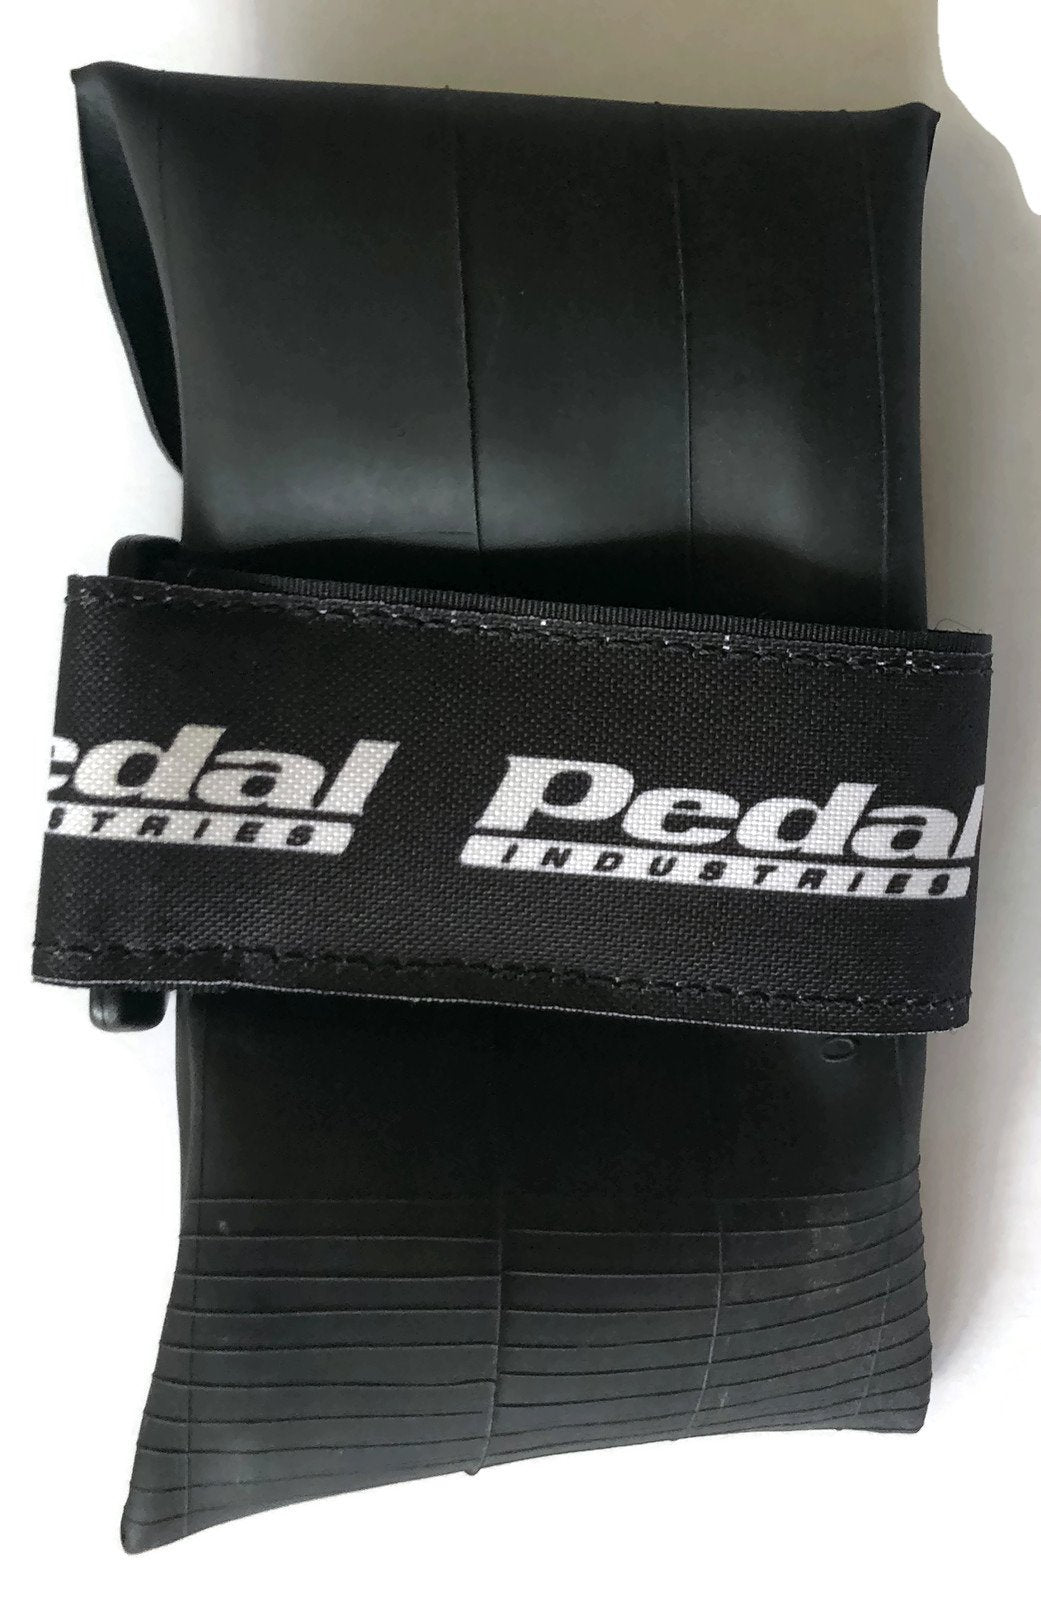 PEDAL MINI RaceDay Bag™